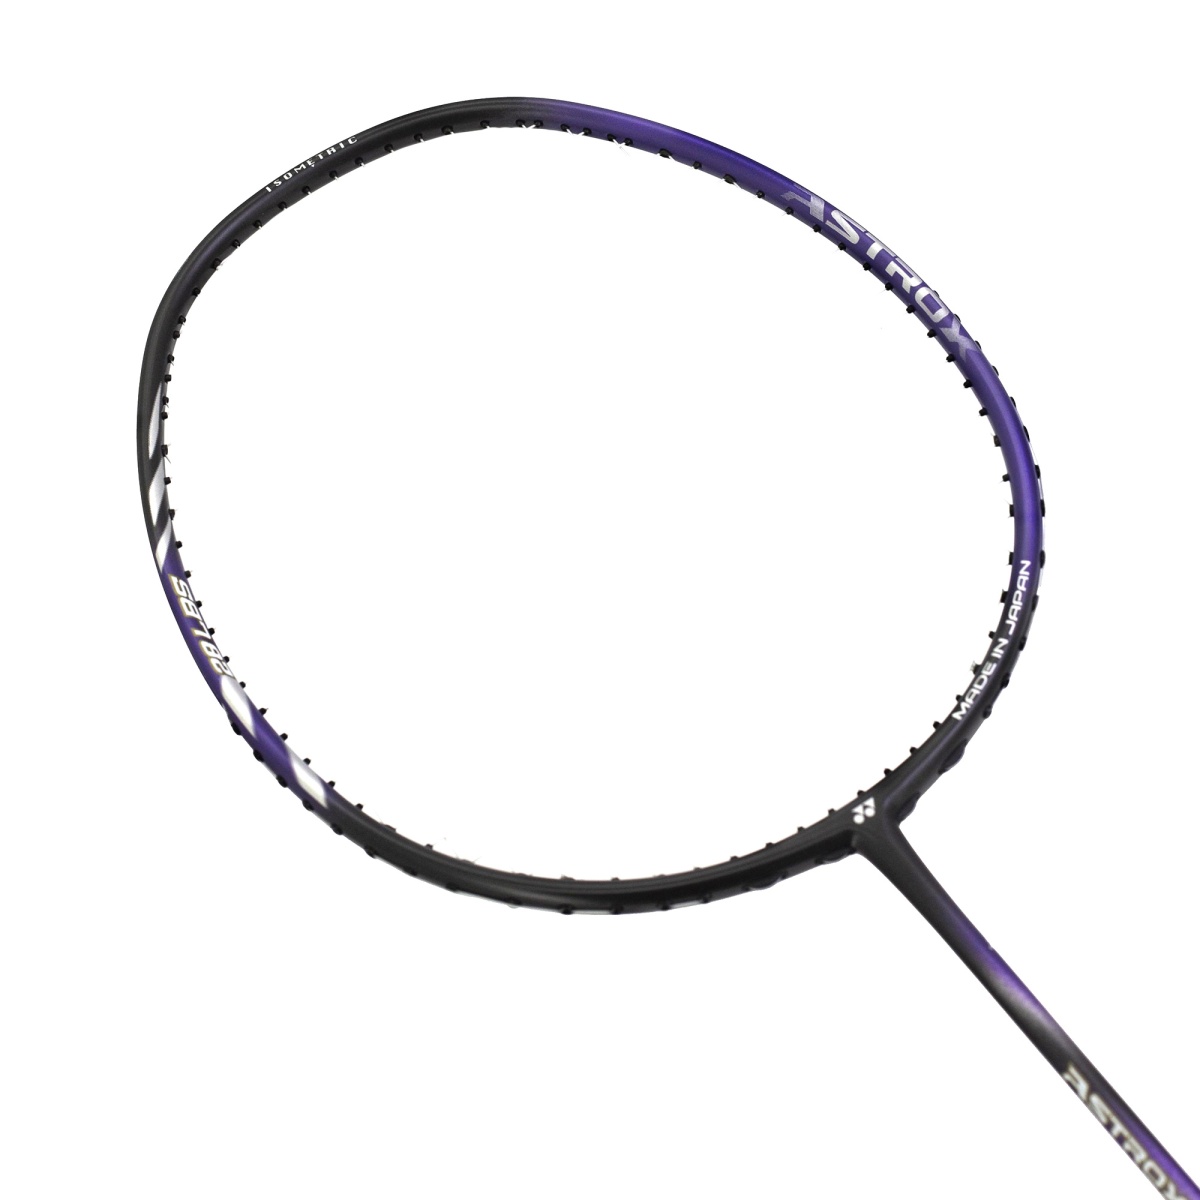 Buy Yonex Astrox Tour 9100 Badminton Racket